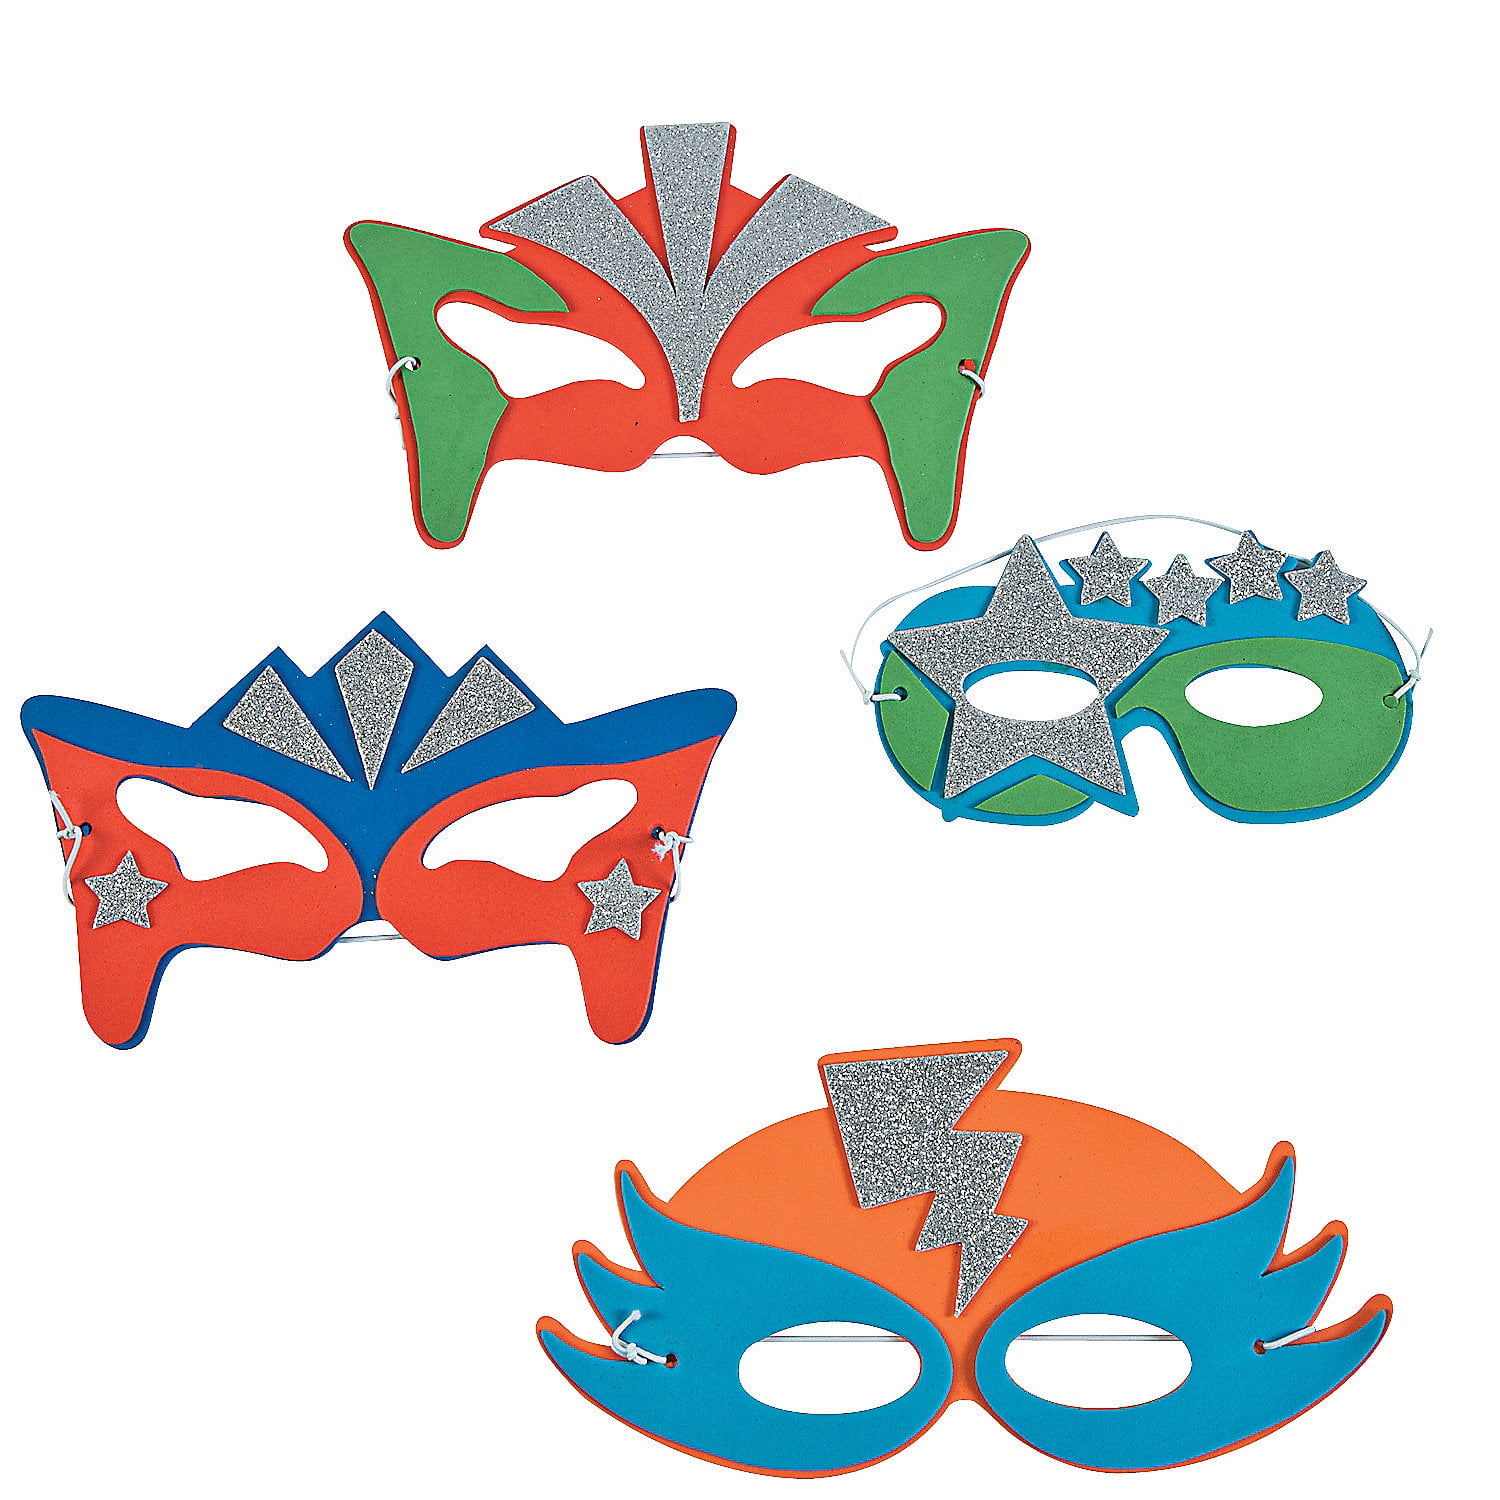 Foam Superhero Masks U.S 24 Count Toy